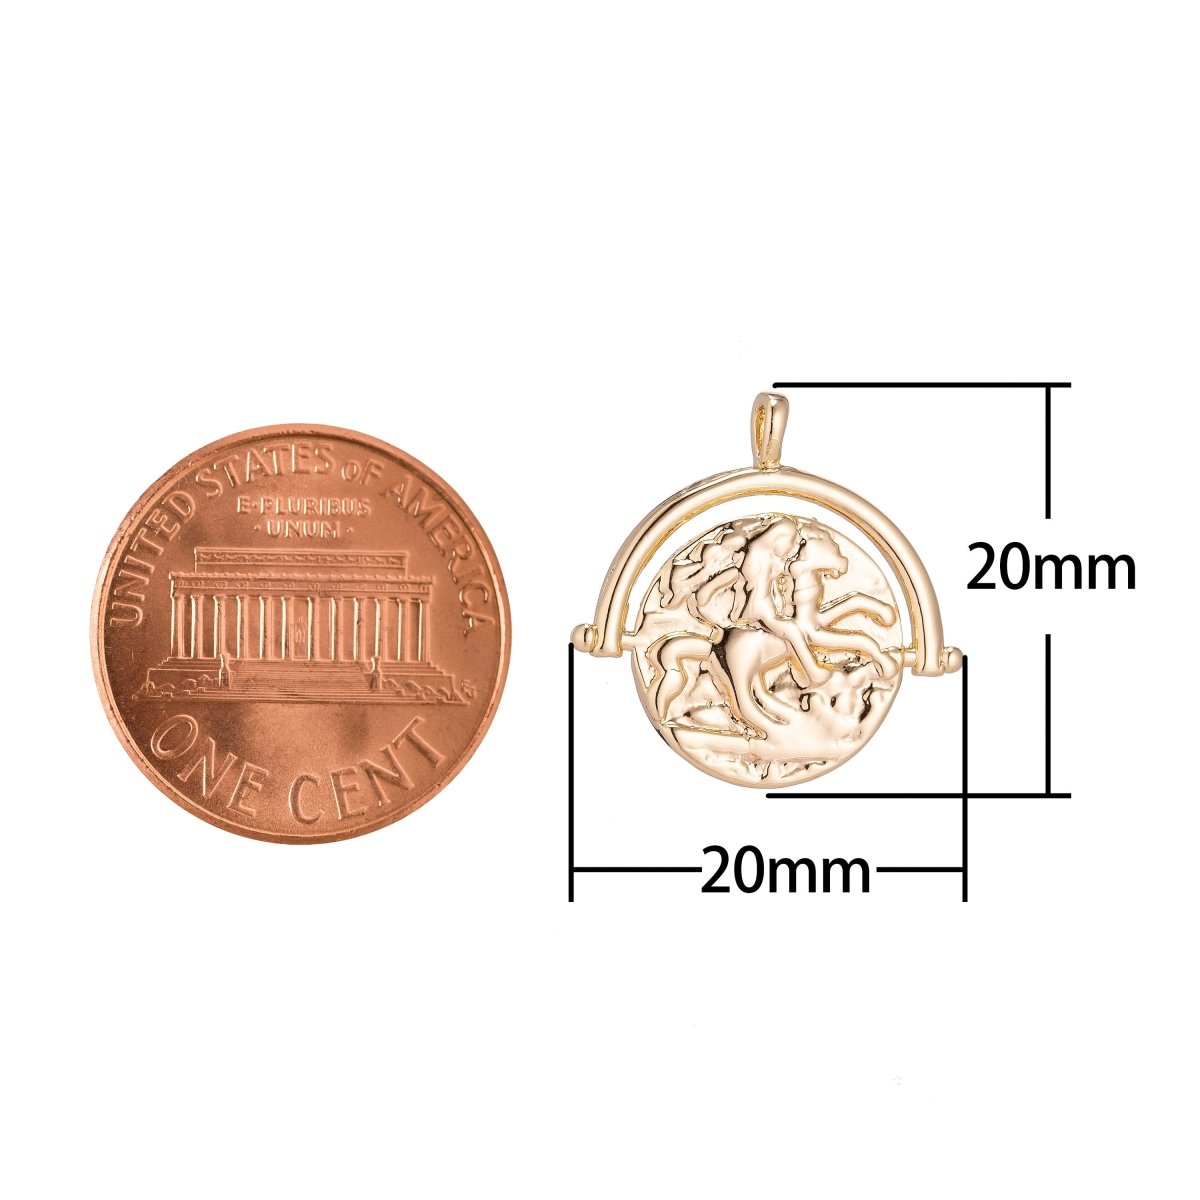 18k Gold Filled Coin Lady Godiva Horse Charm Pendant C-034 - DLUXCA